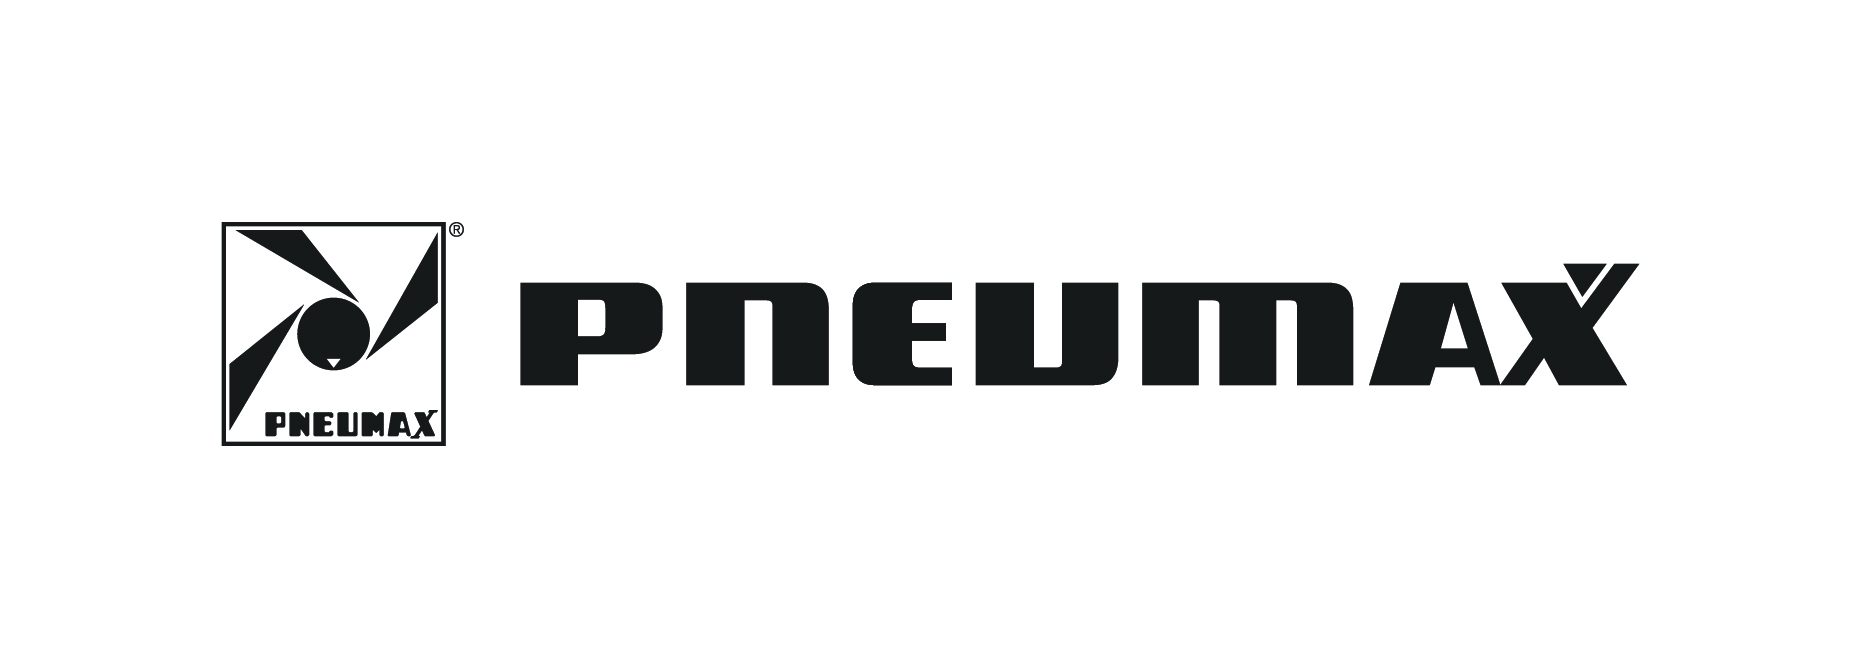 Pneumax Logo σε λευκό φόντο